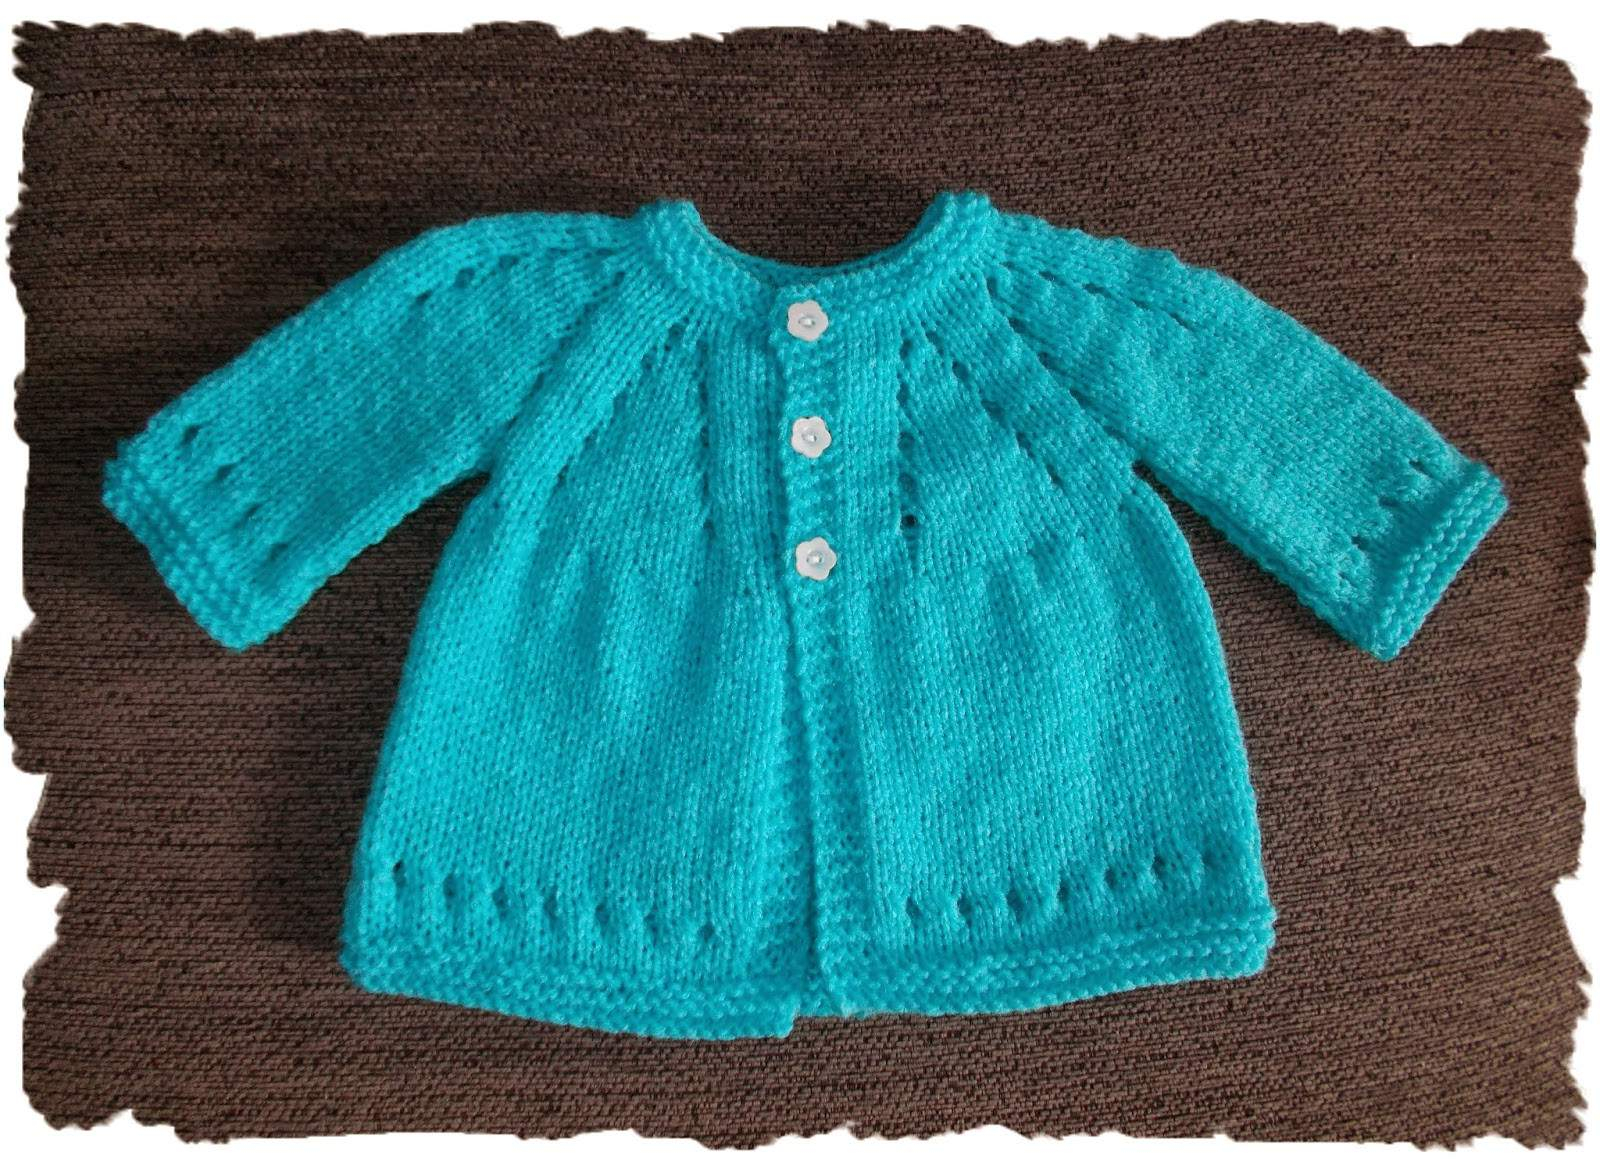 Free Knitting Patterns Baby Cardigans New Rosabel Knitted Ba Cardigan Free Knitting Pattern Free